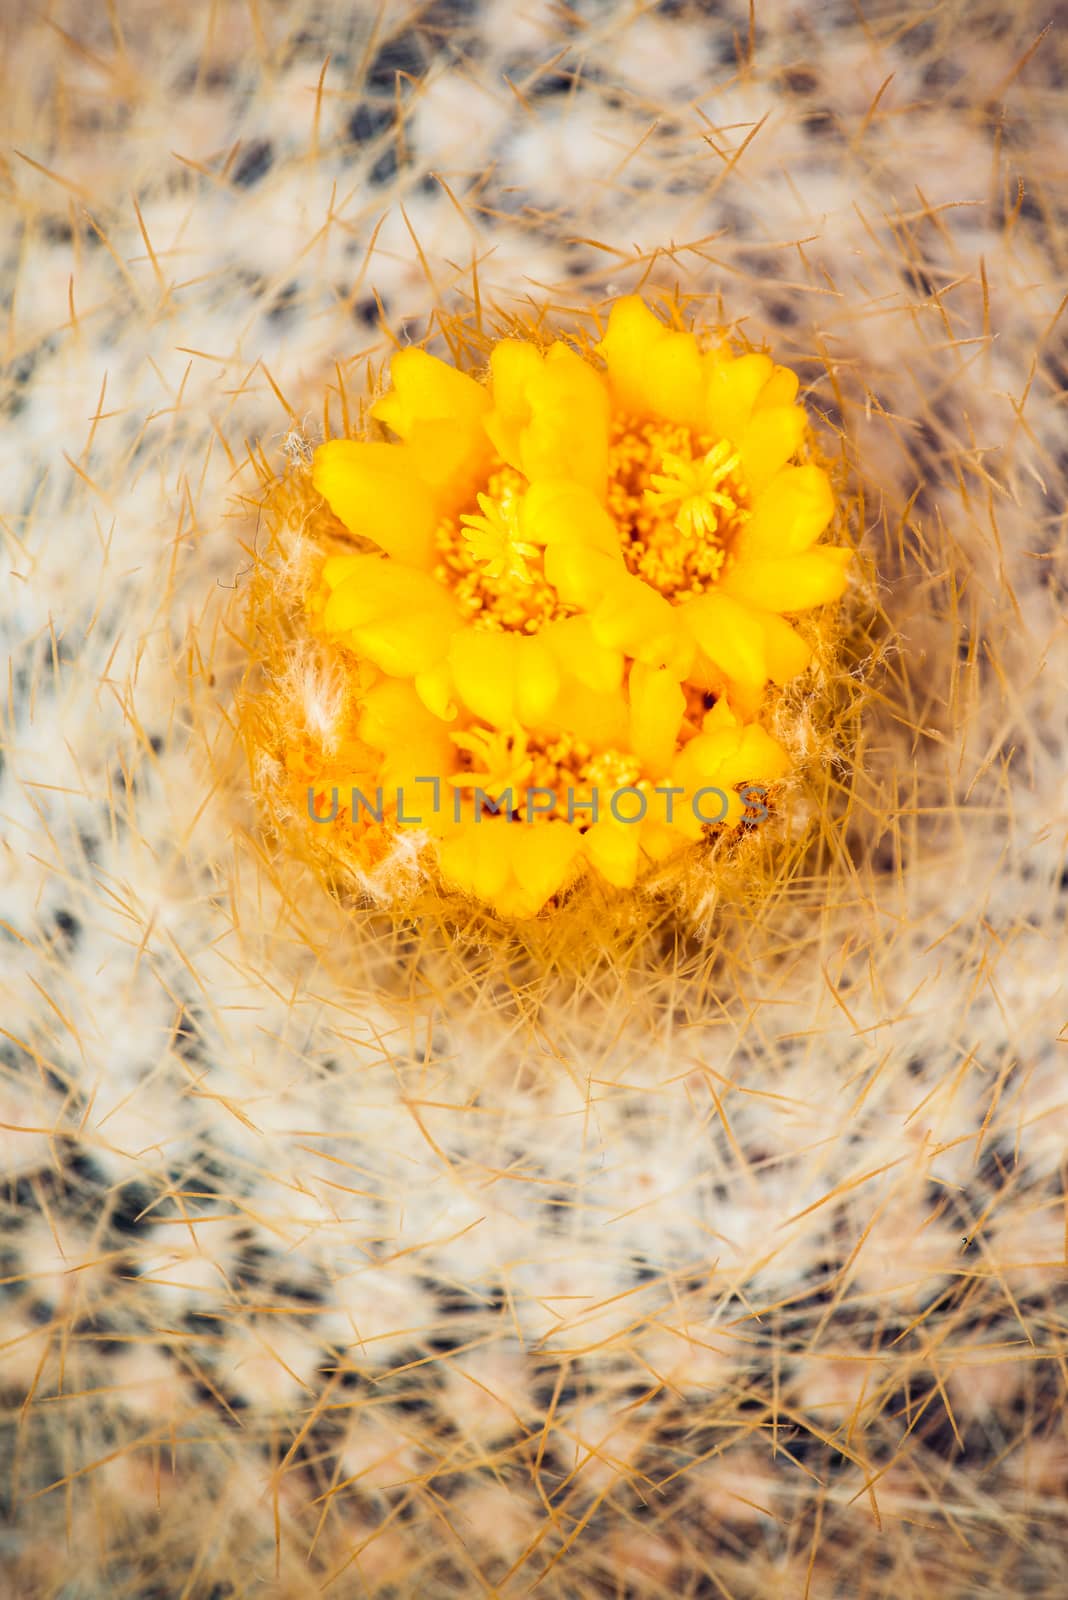  blossom cactus in garden by skrotov